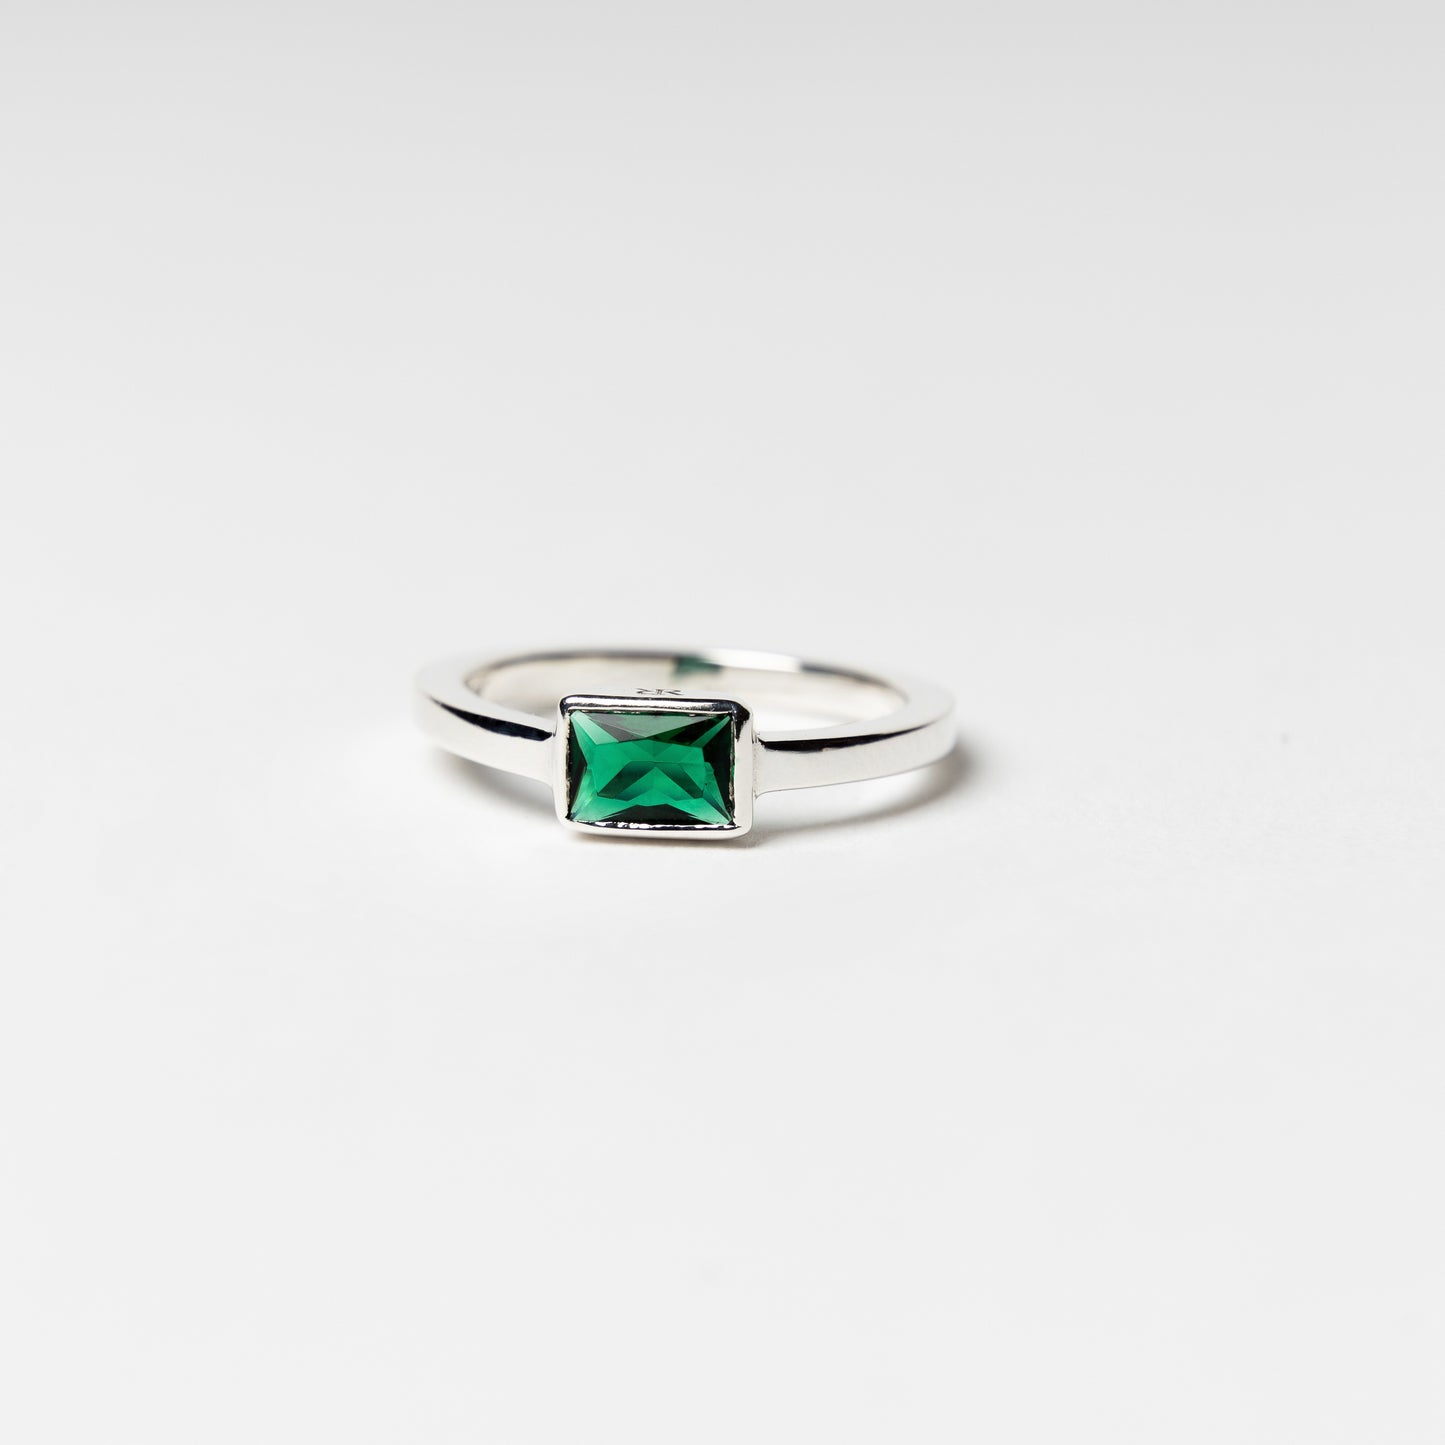 Rectangular emerald stone ring